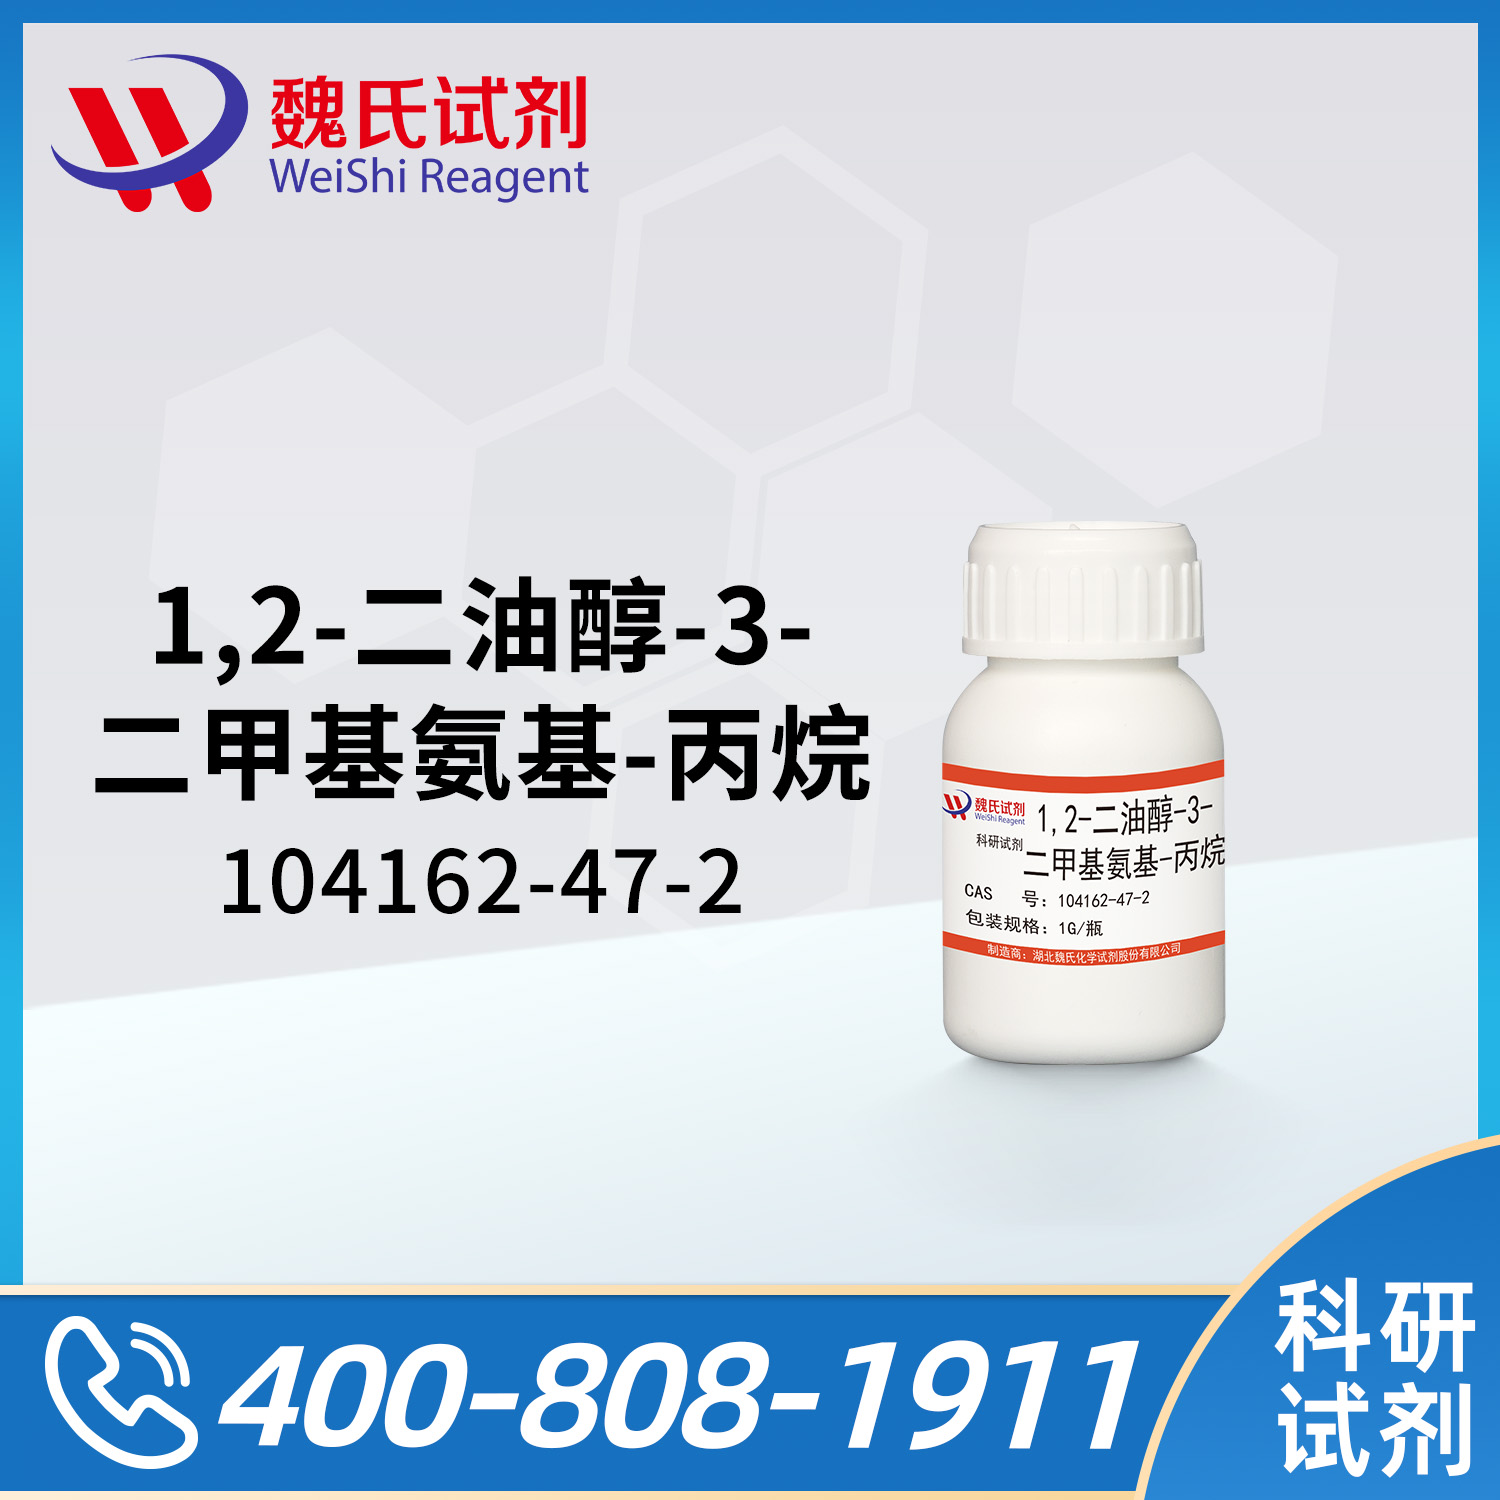 1,2-Dioleyloxy-3-dimethylamino-propane